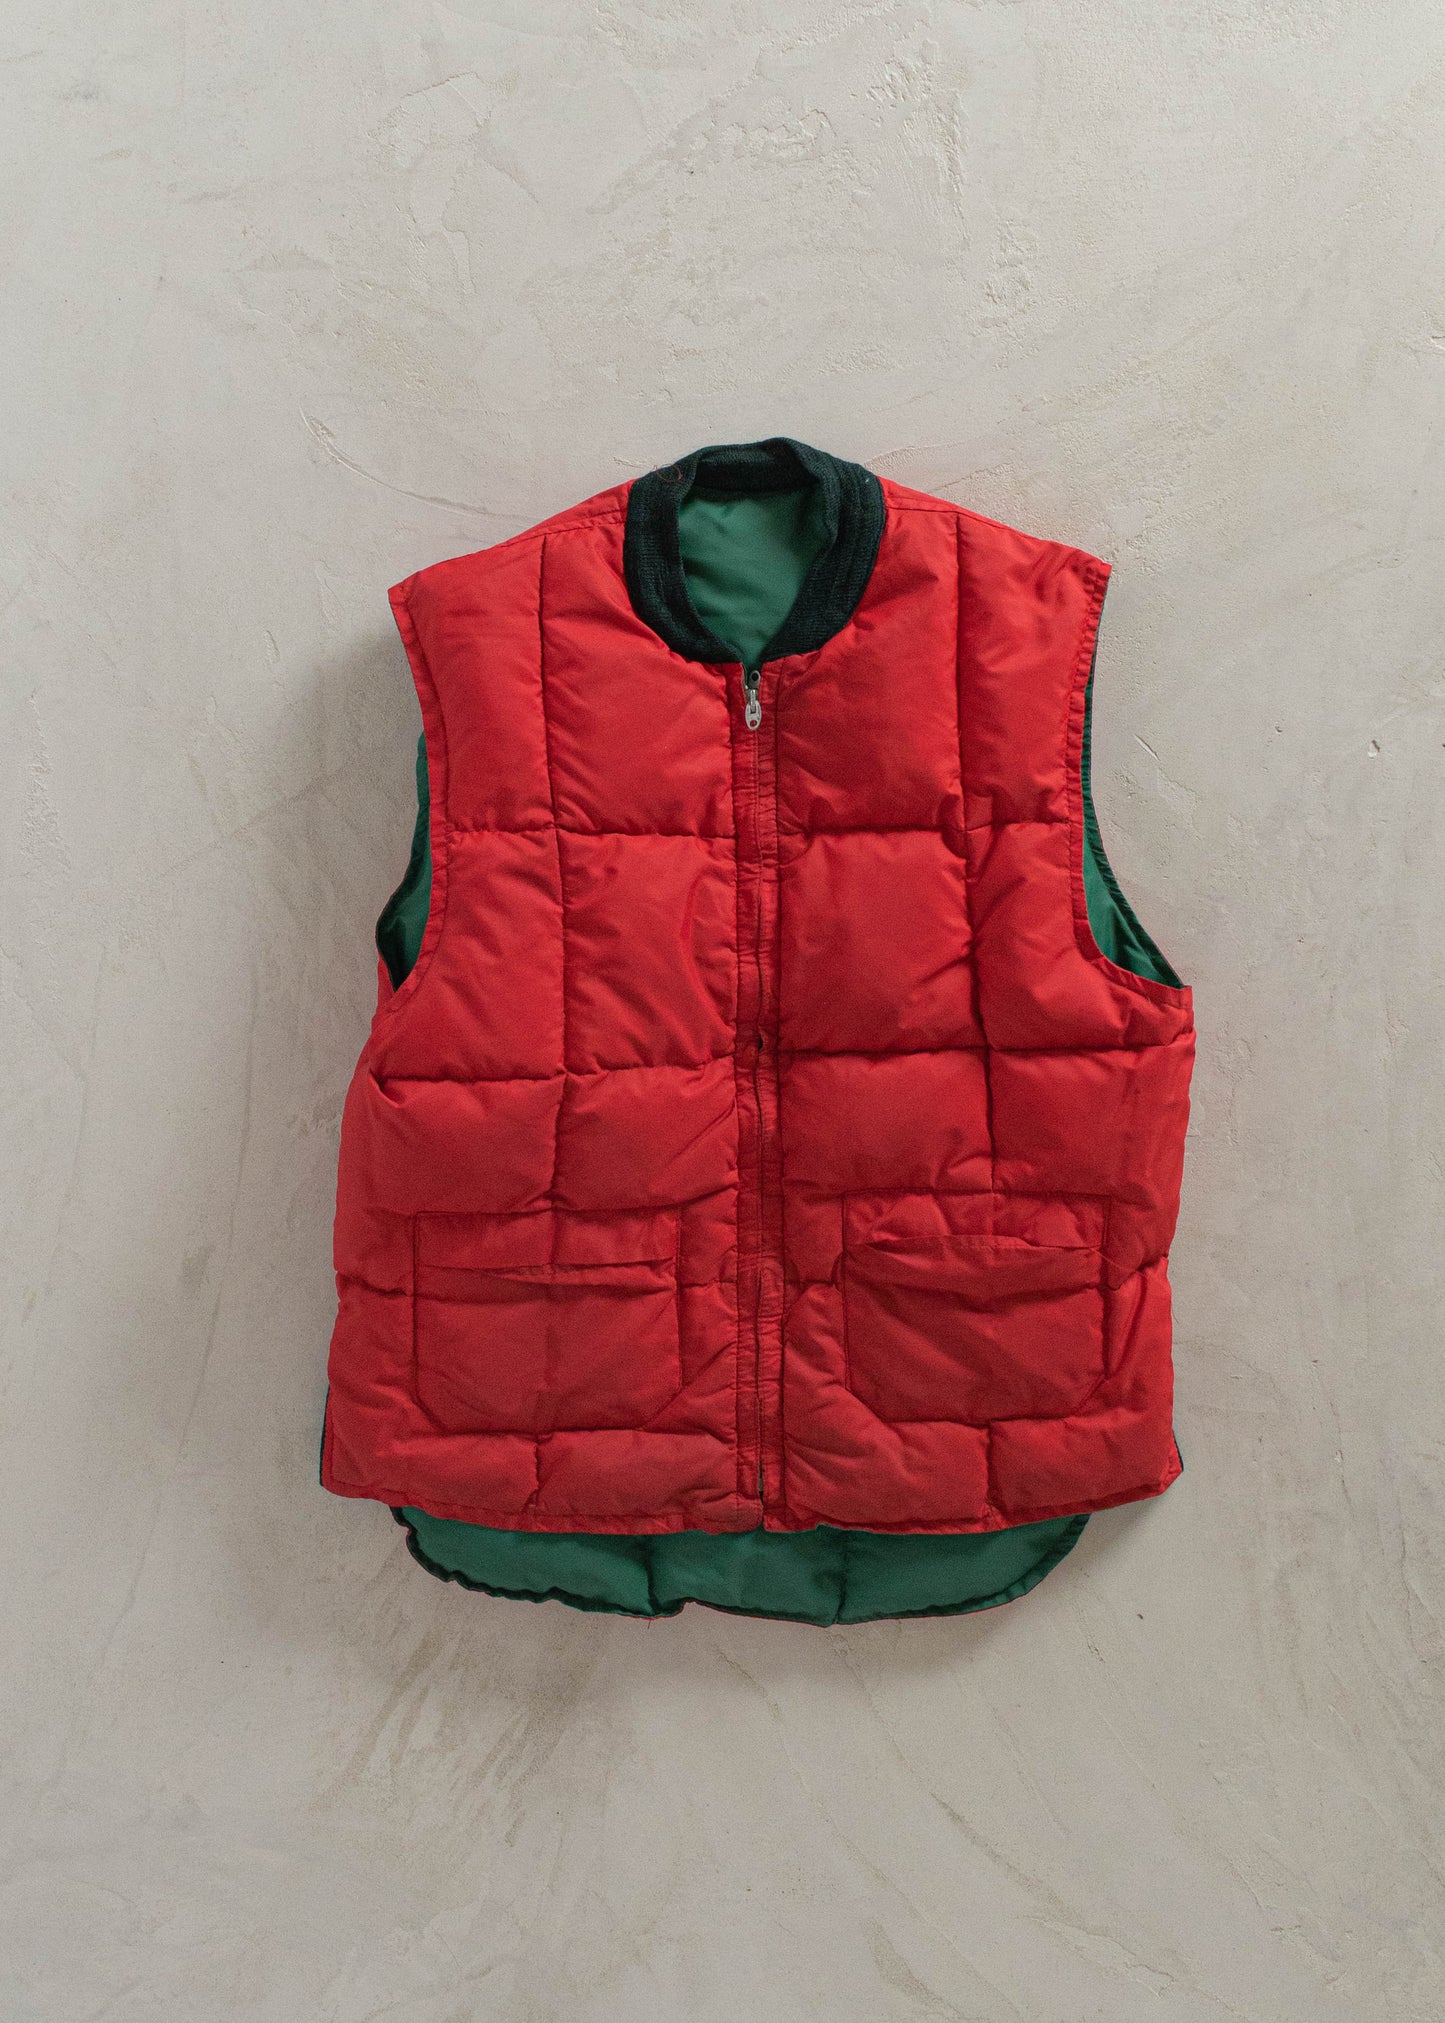 1980s Falcon Brand Reversible Nylon Down Puffer Vest Size S/M